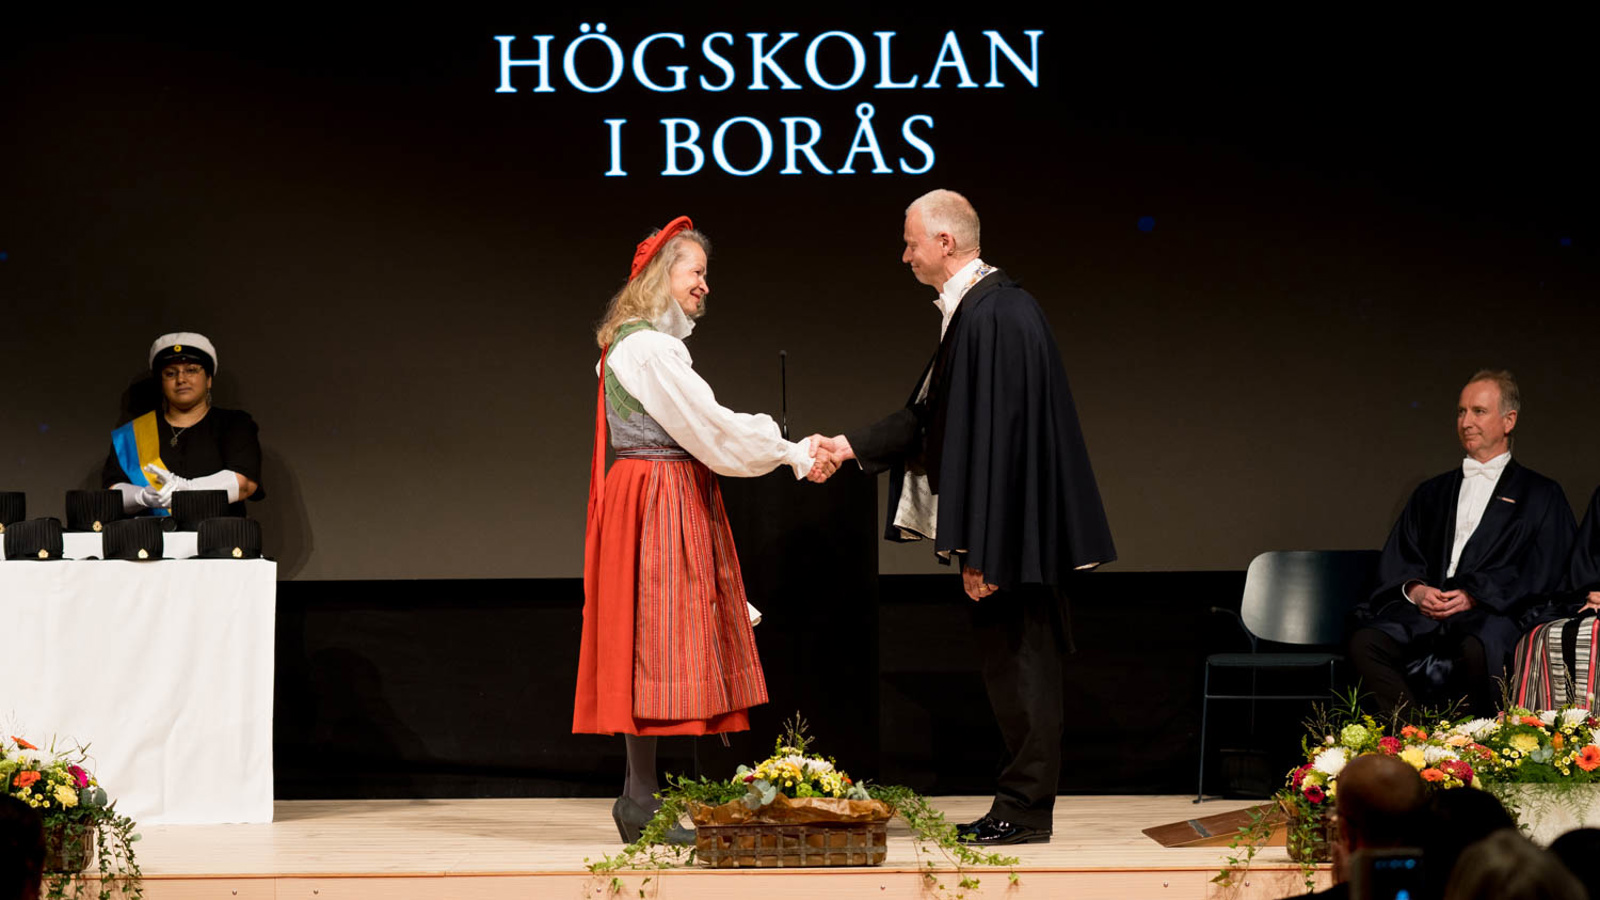 Professor Carina Hermansson is shaking hands with Vice Chancellor Mats Tinnsten